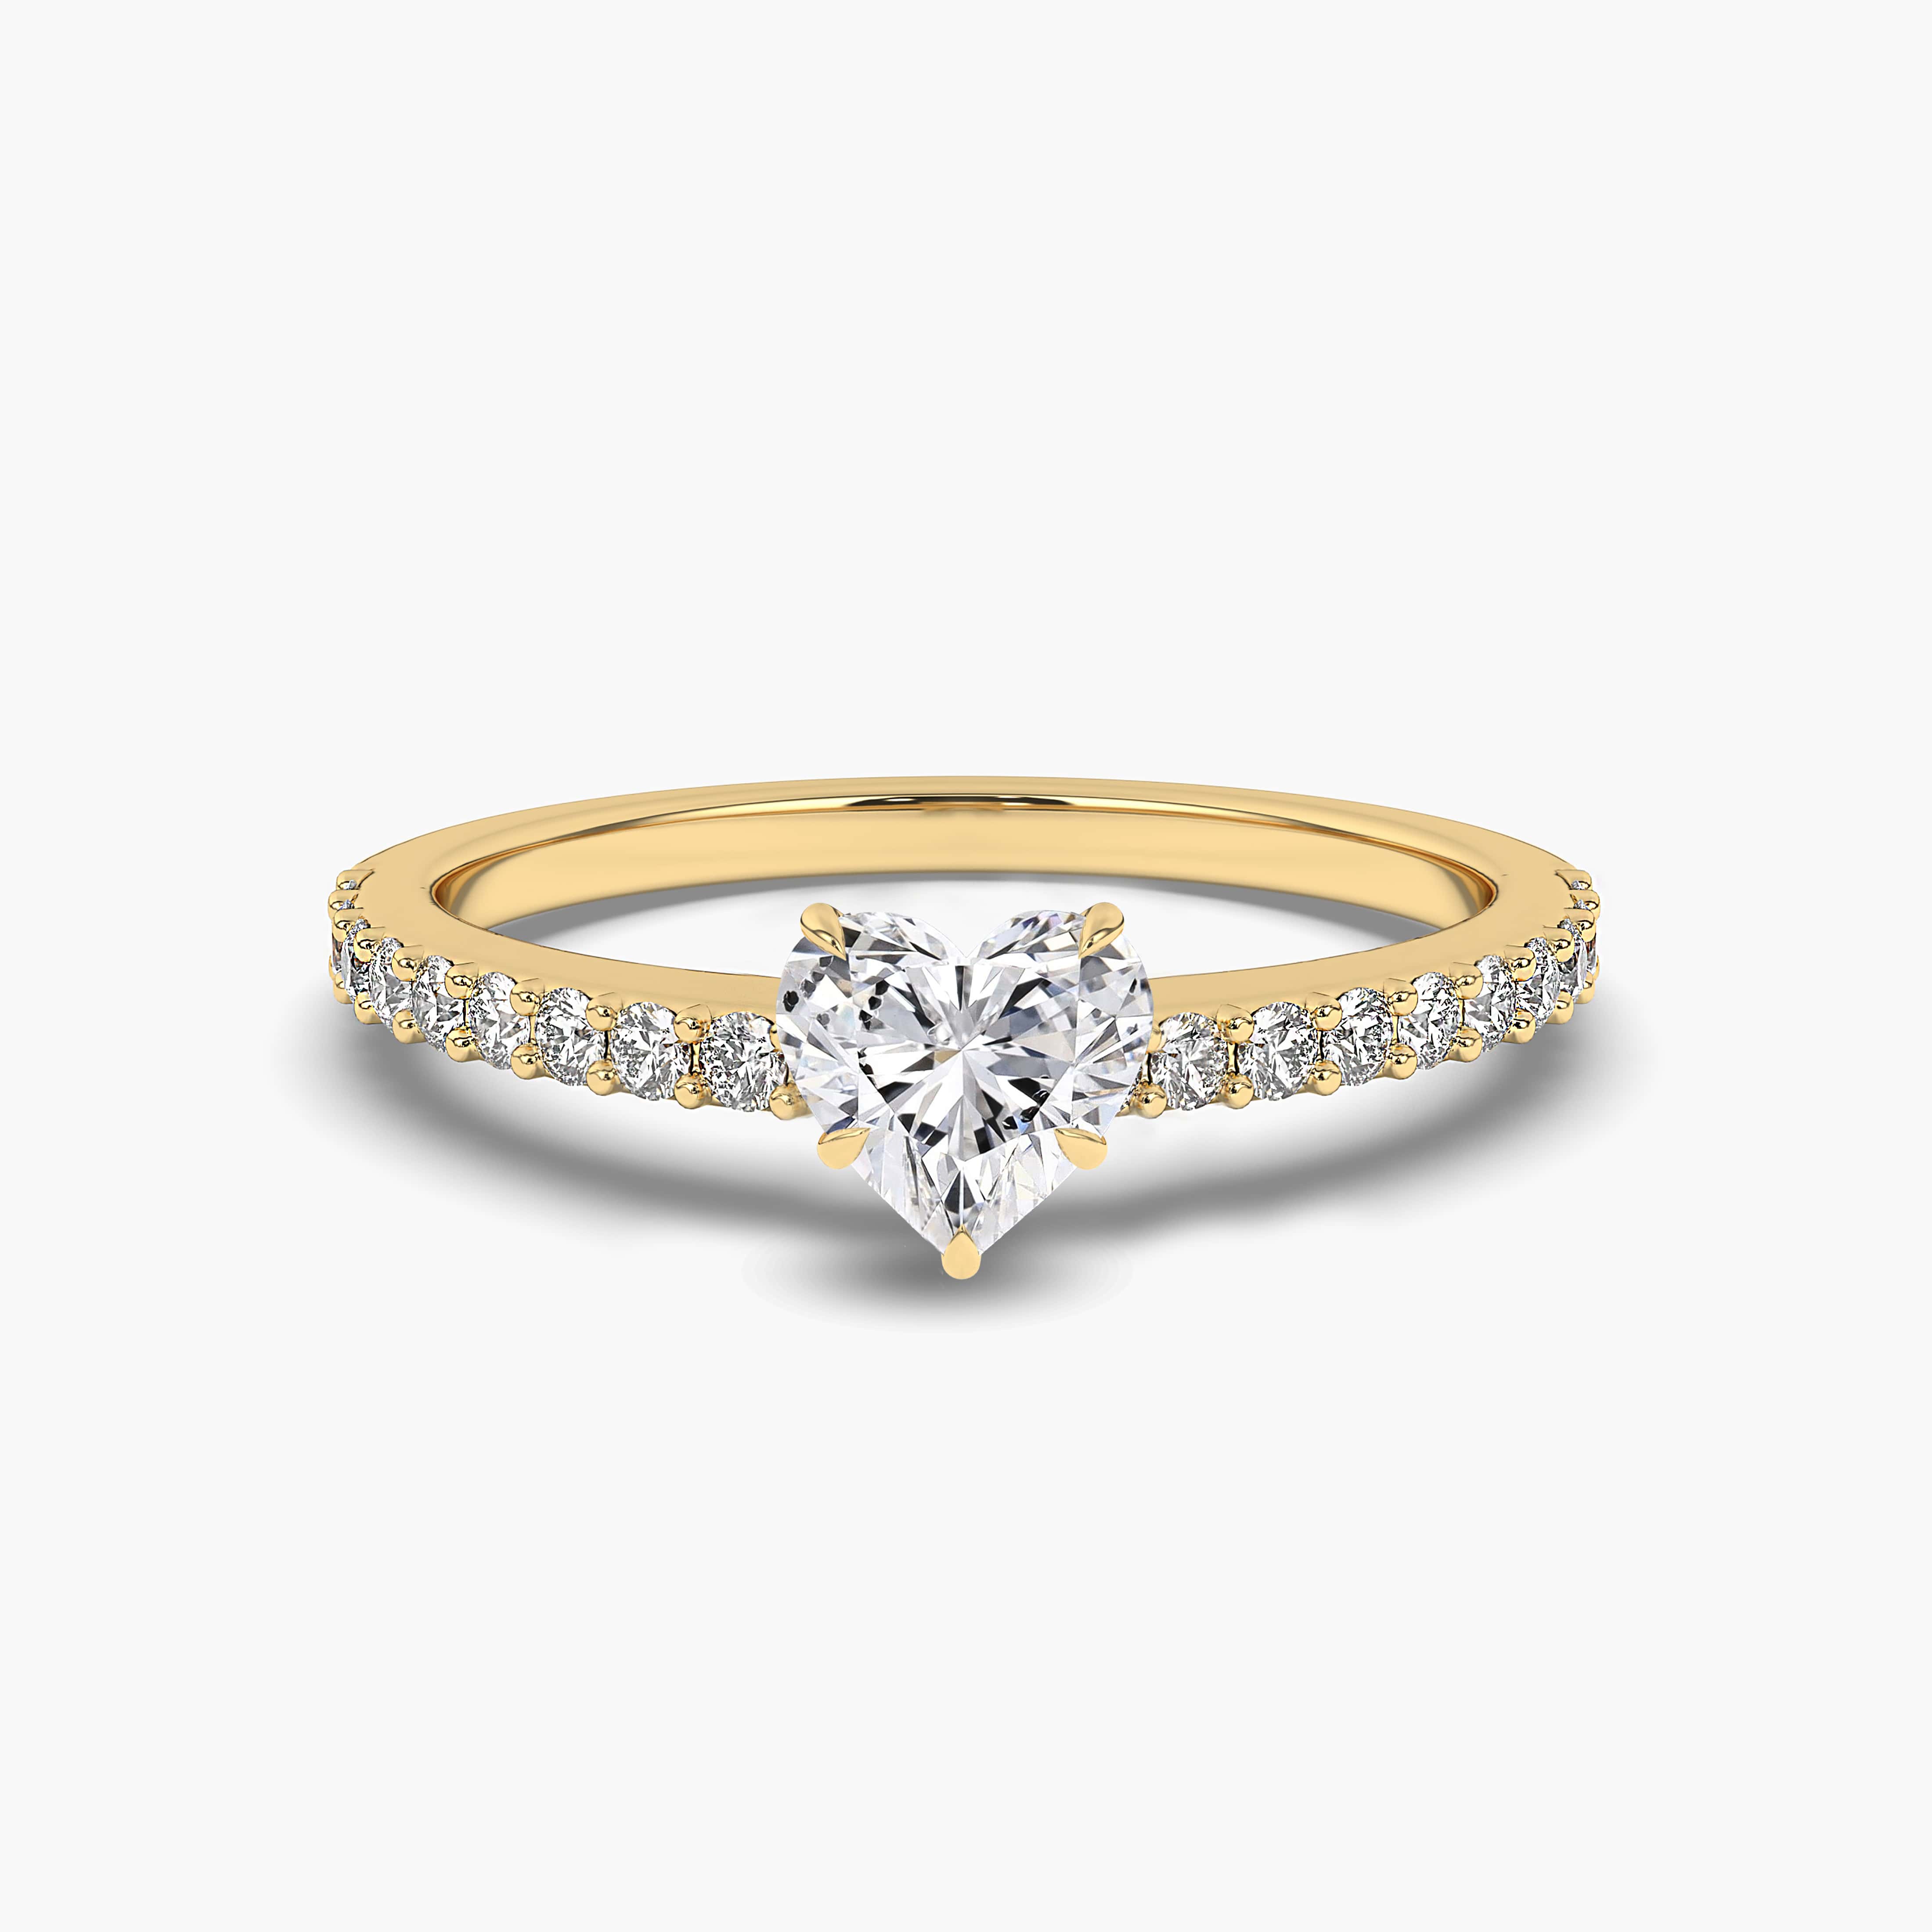 0.50carat emerald cut ring with wedding band